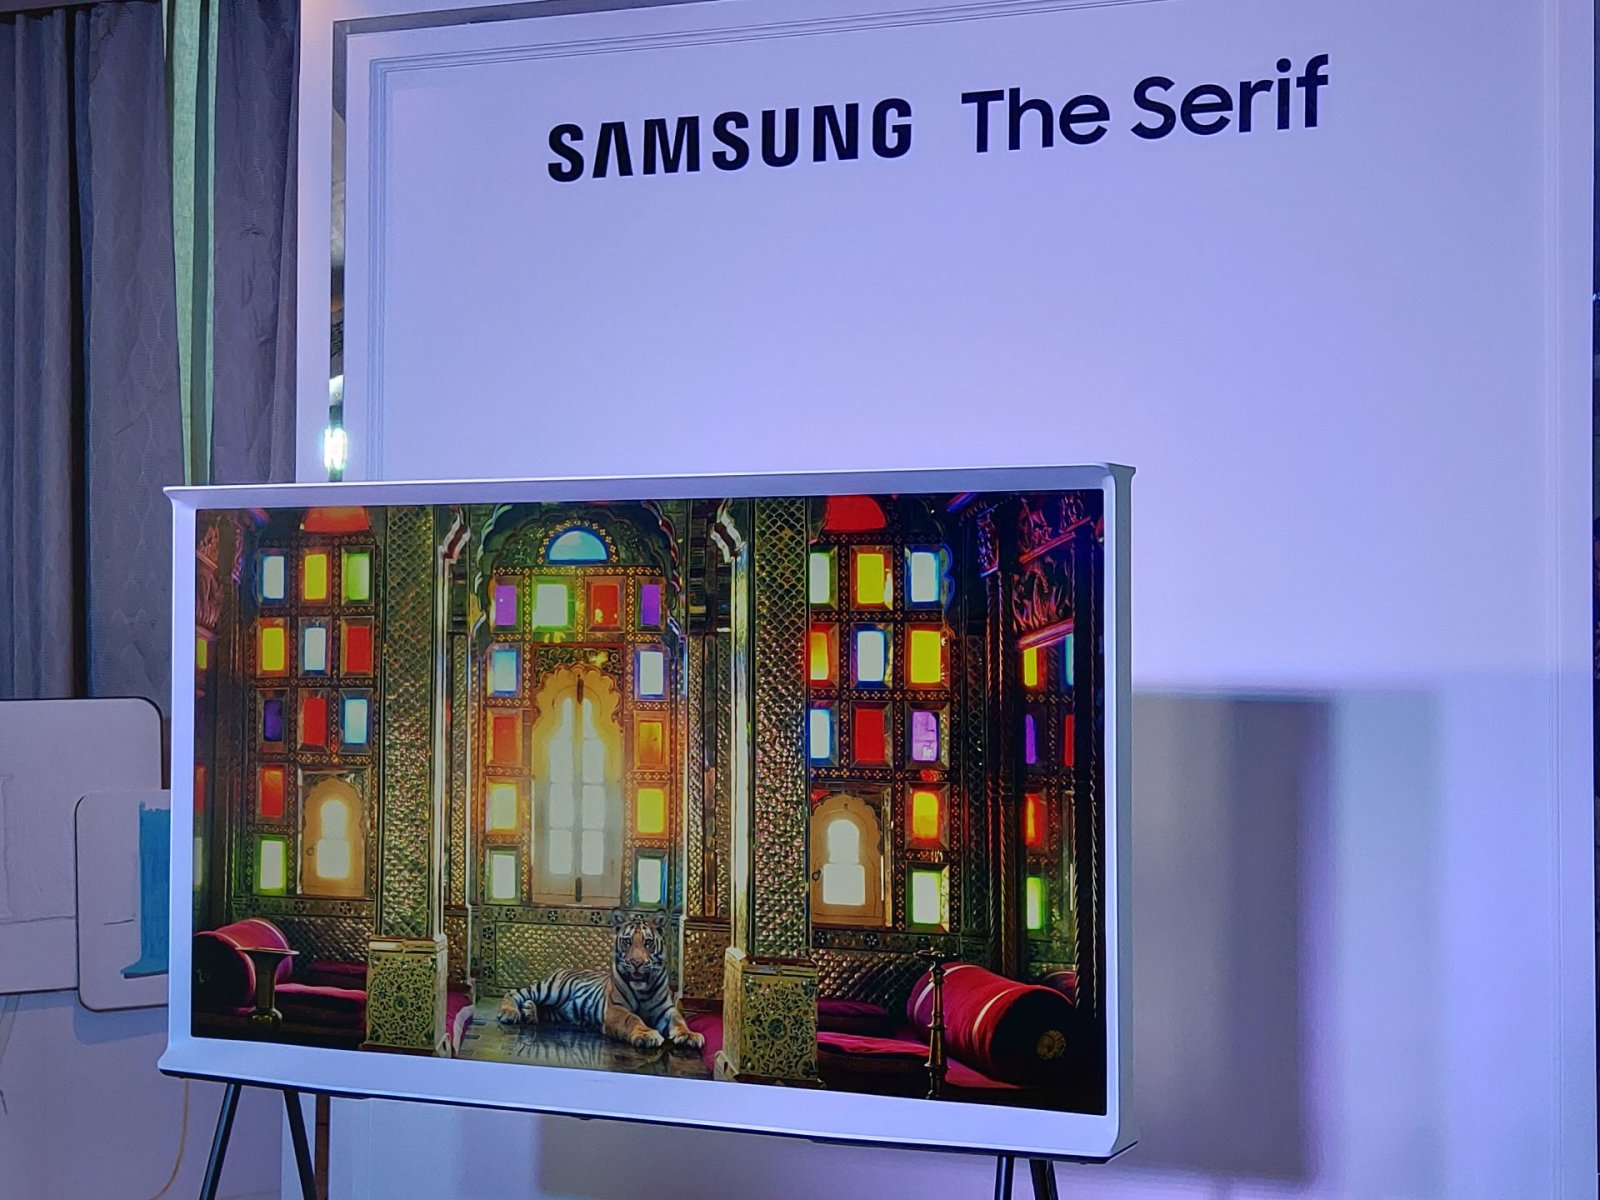 Samsung The Serif